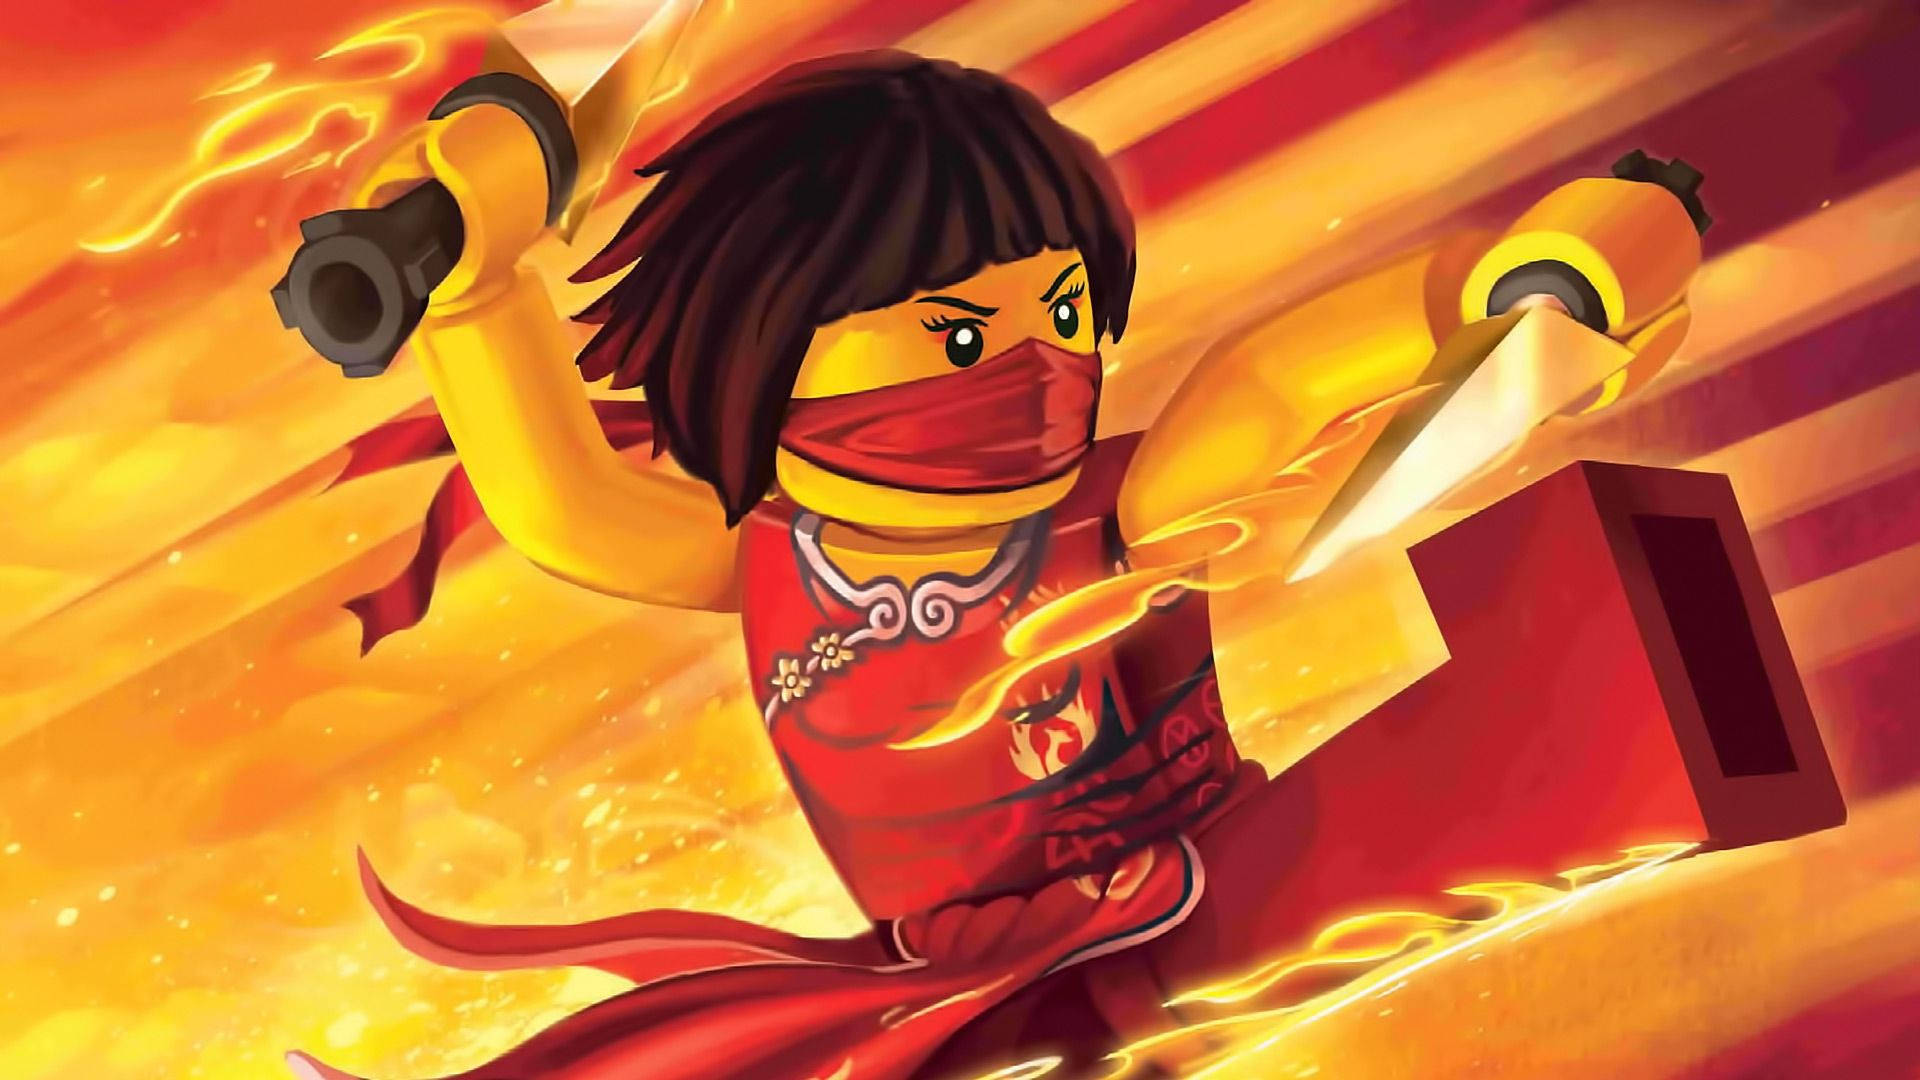 Lego Ninjago Nya In Red Dress Background